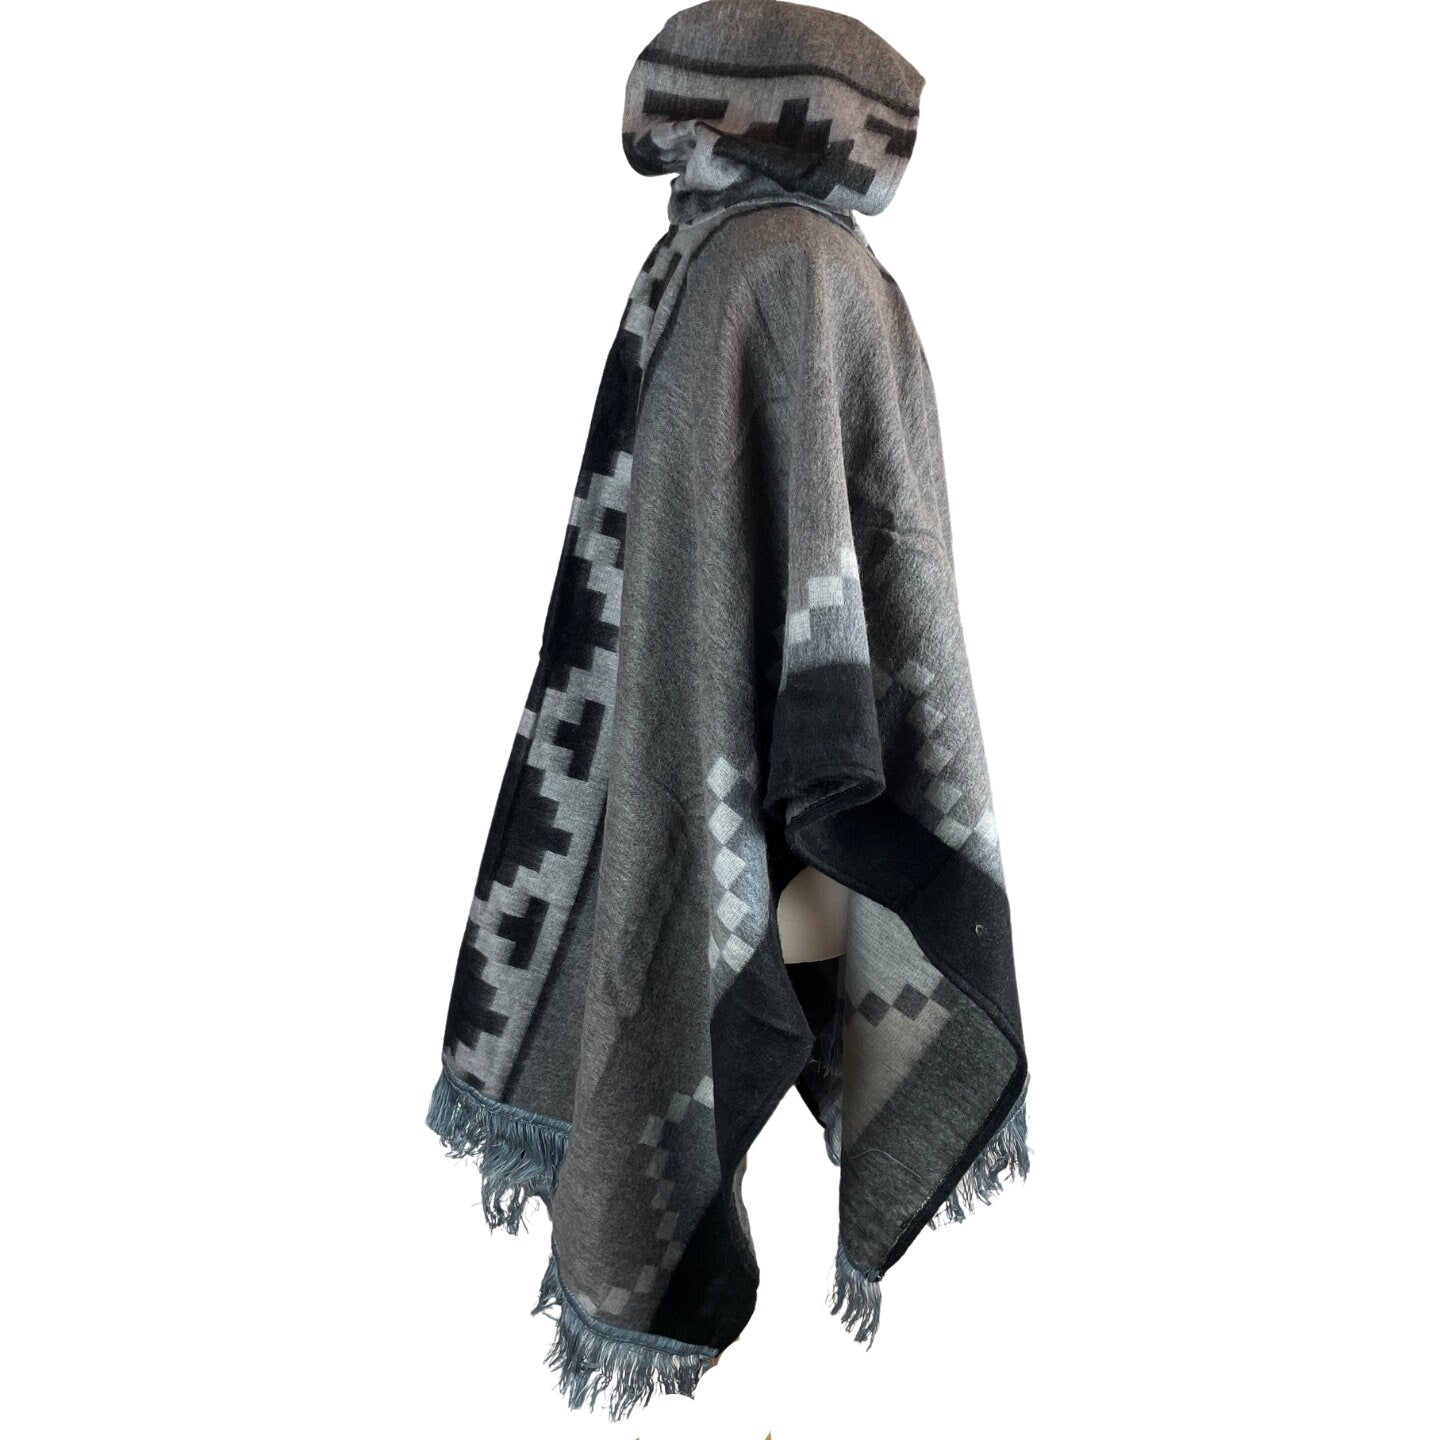 Warm Hooded Poncho Women | Black Shades of Gray